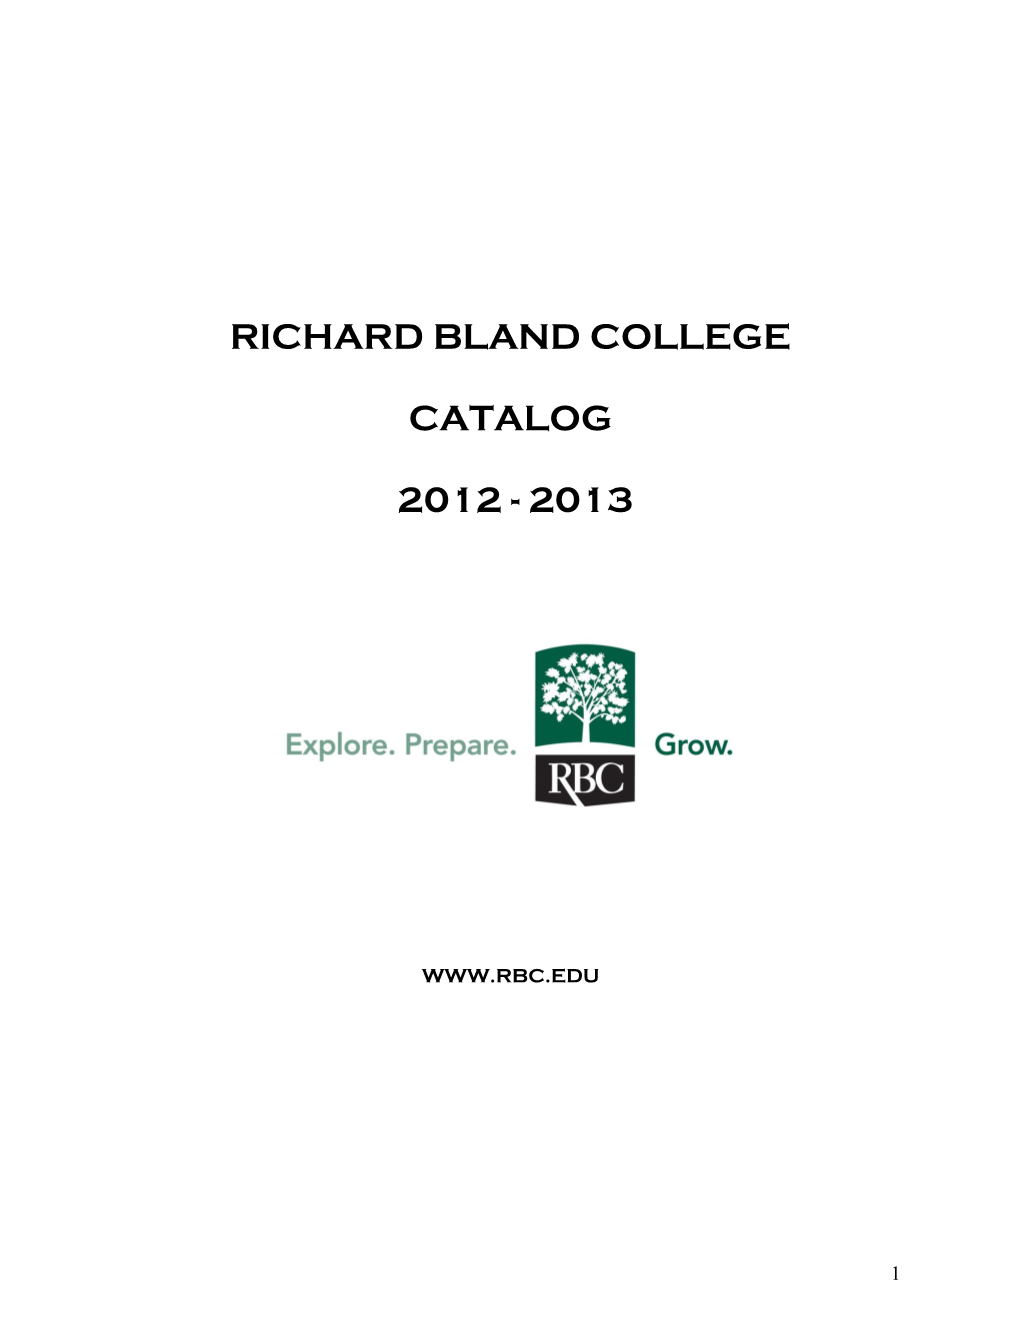 Richard Bland College Catalog 2012